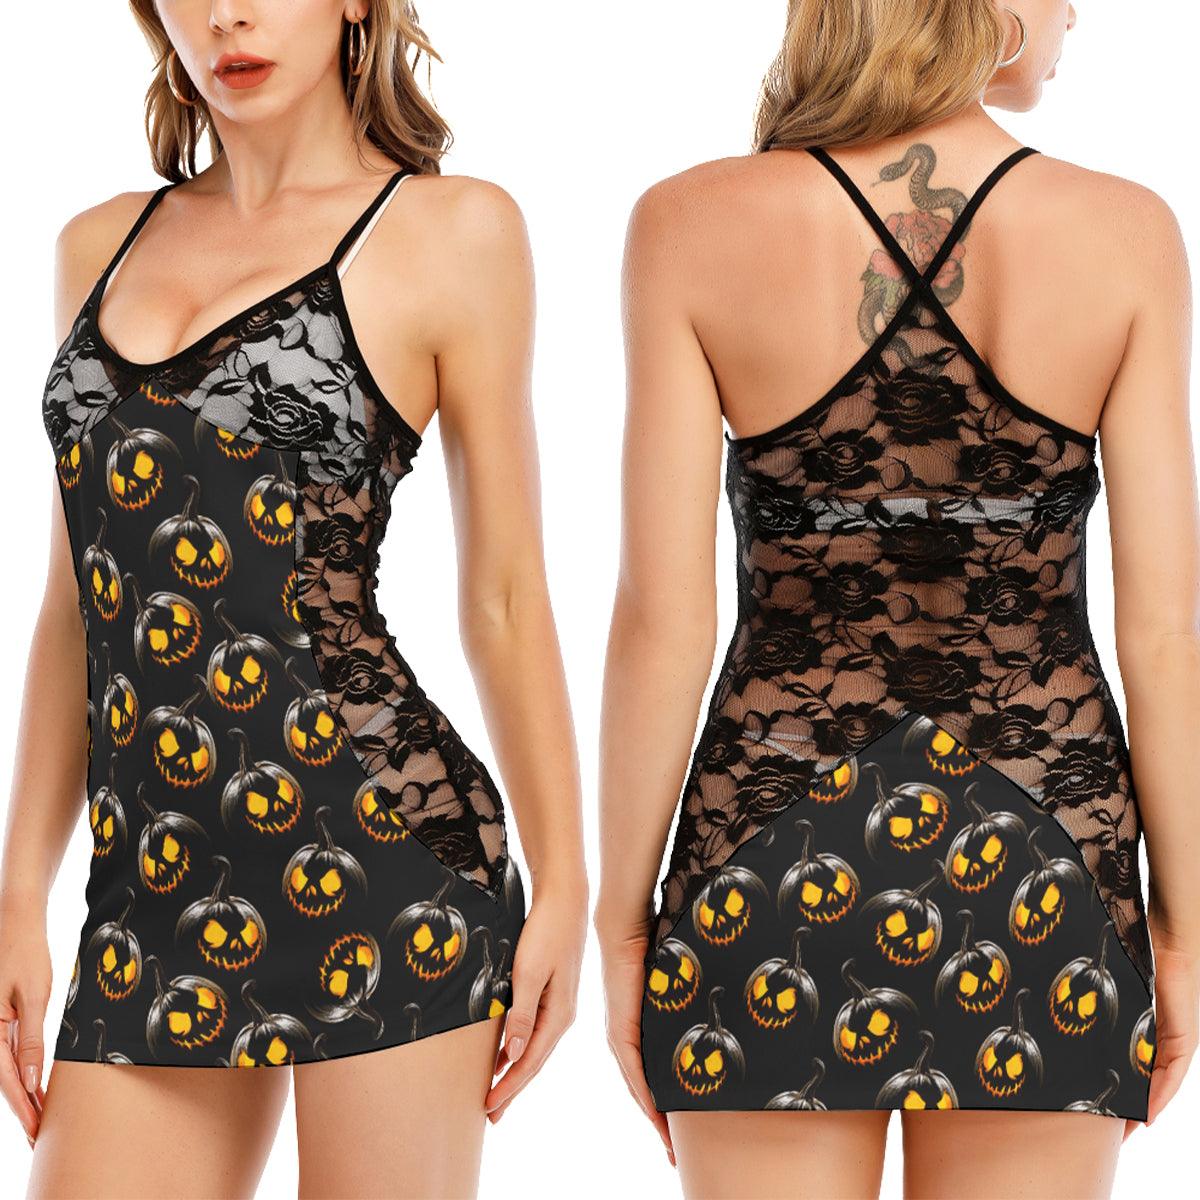 Scary Pumpkin All-Over Print Women Black Lace Cami Dress, Sexy Nightwear For Women - Wonder Skull